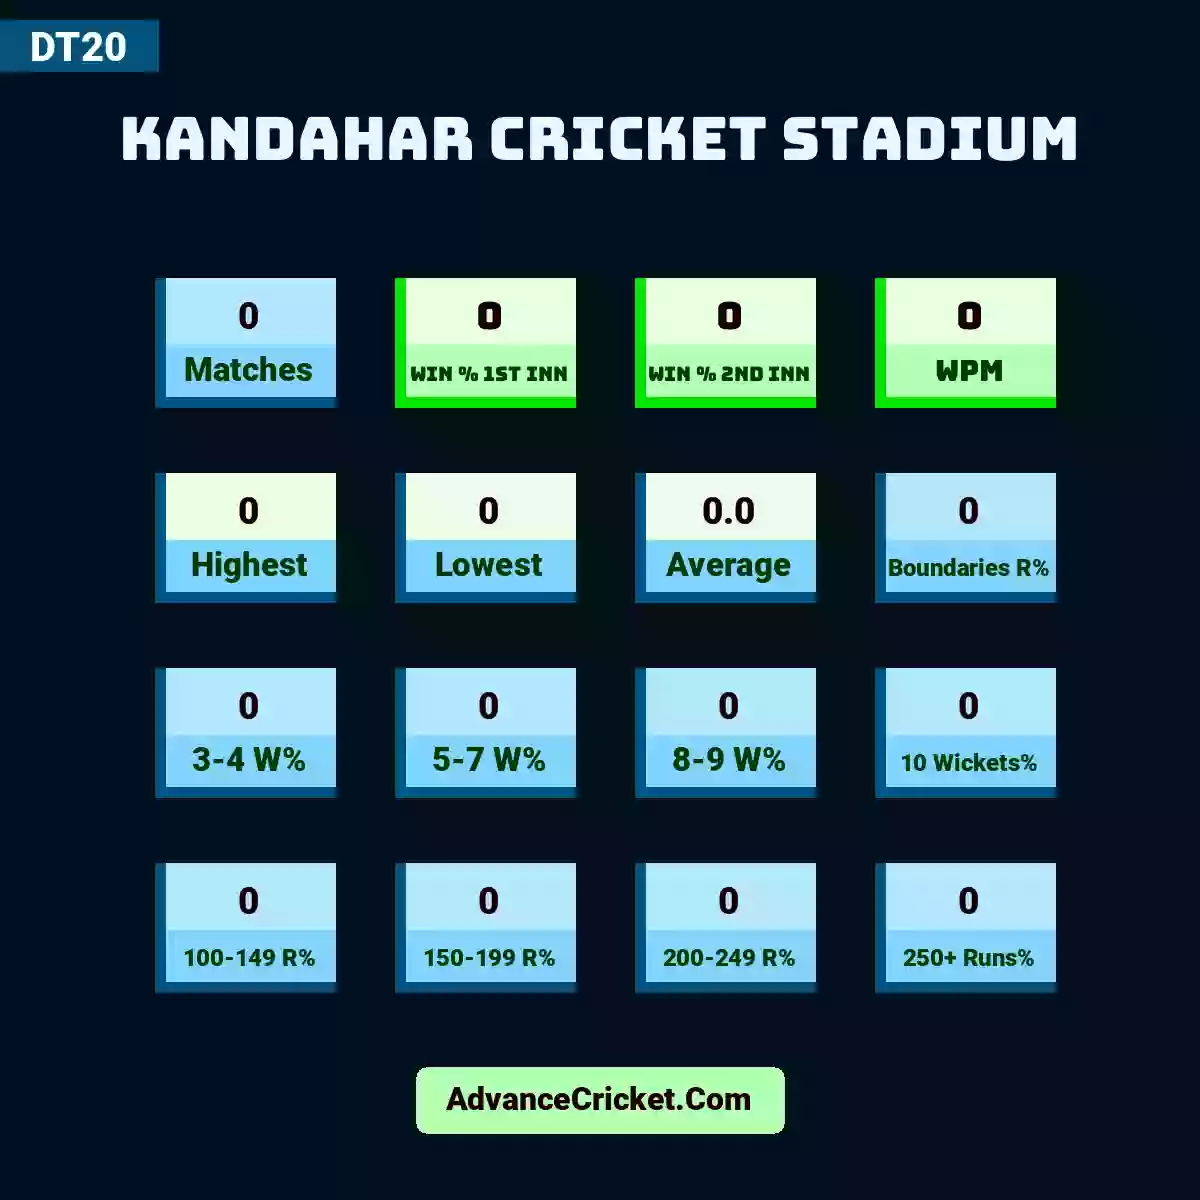 Image showing Kandahar Cricket Stadium DT20 with Matches: 0, Win % 1st Inn: 0, Win % 2nd Inn: 0, WPM: 0, Highest: 0, Lowest: 0, Average: 0.0, Boundaries R%: 0, 3-4 W%: 0, 5-7 W%: 0, 8-9 W%: 0, 10 Wickets%: 0, 100-149 R%: 0, 150-199 R%: 0, 200-249 R%: 0, 250+ Runs%: 0.